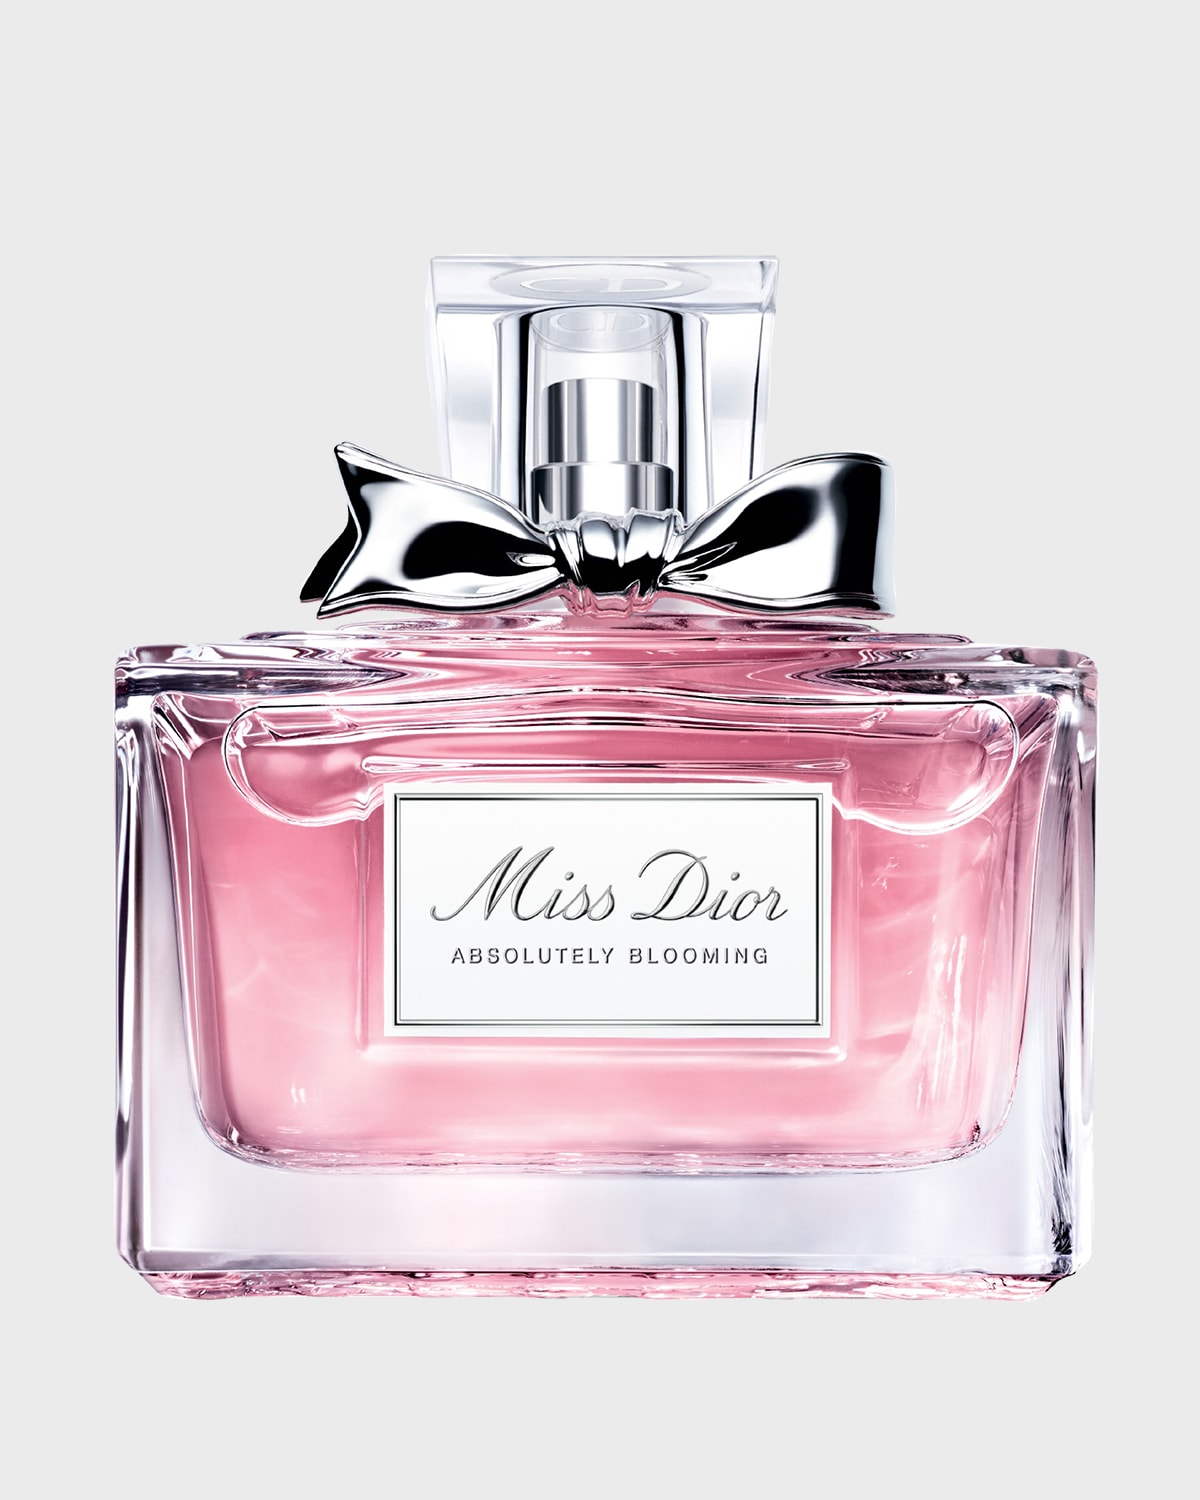 Miss Dior Absolutely Blooming Eau de Toilette, 1.7 oz.